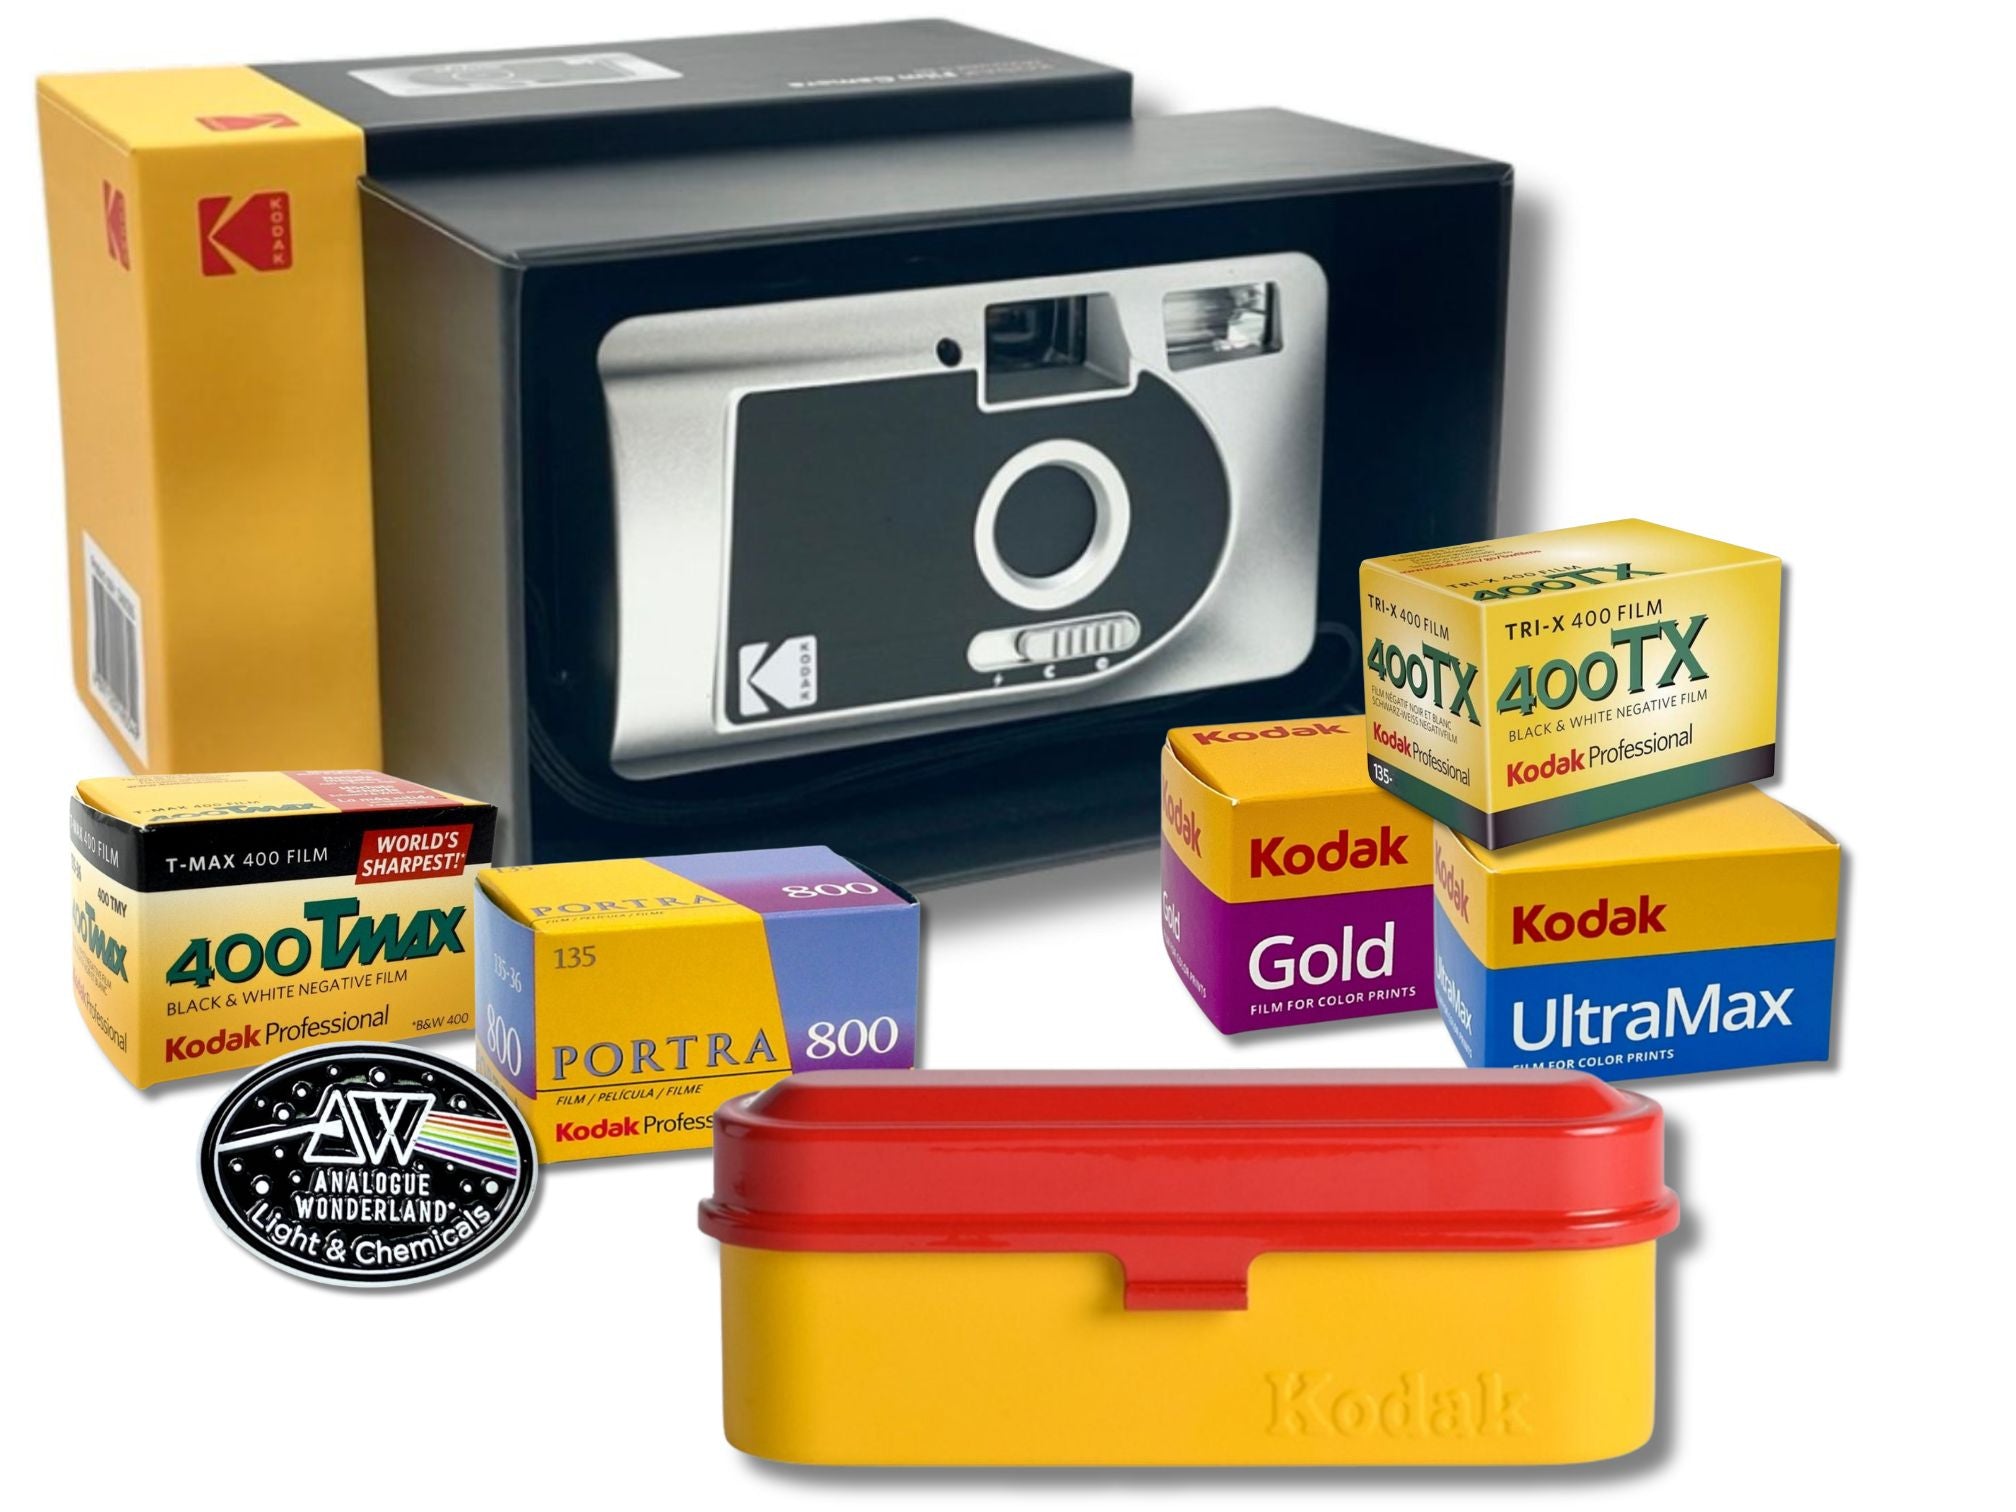 Epic Kodak 35mm Film & Camera Bundle